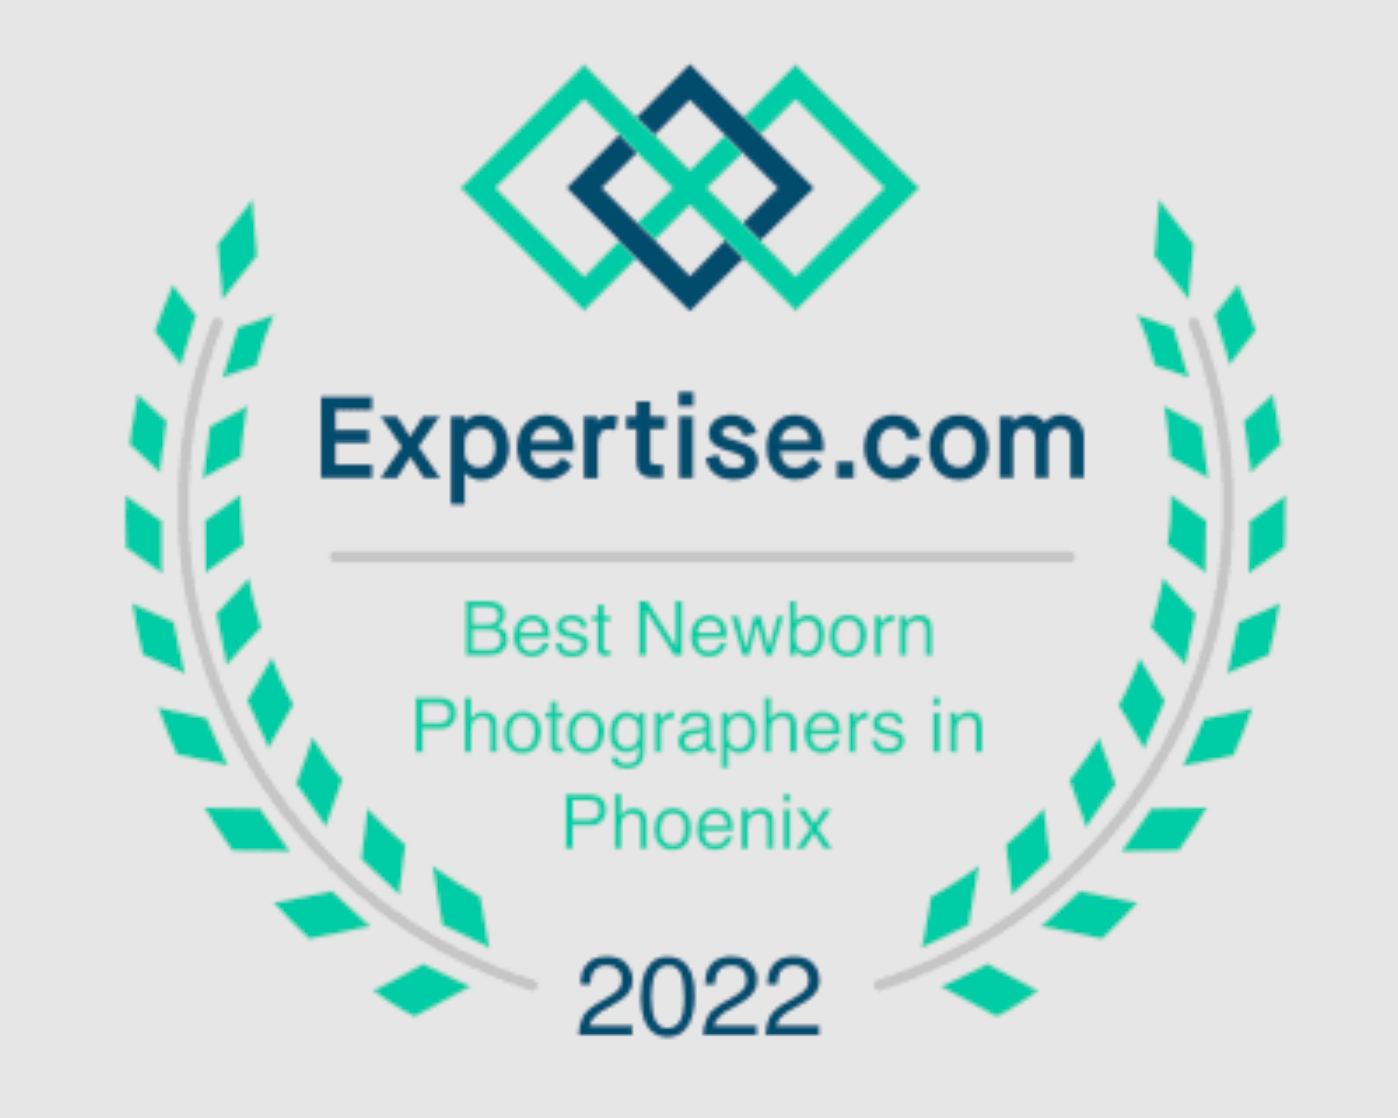 best newborn photographers in phoenix 2022